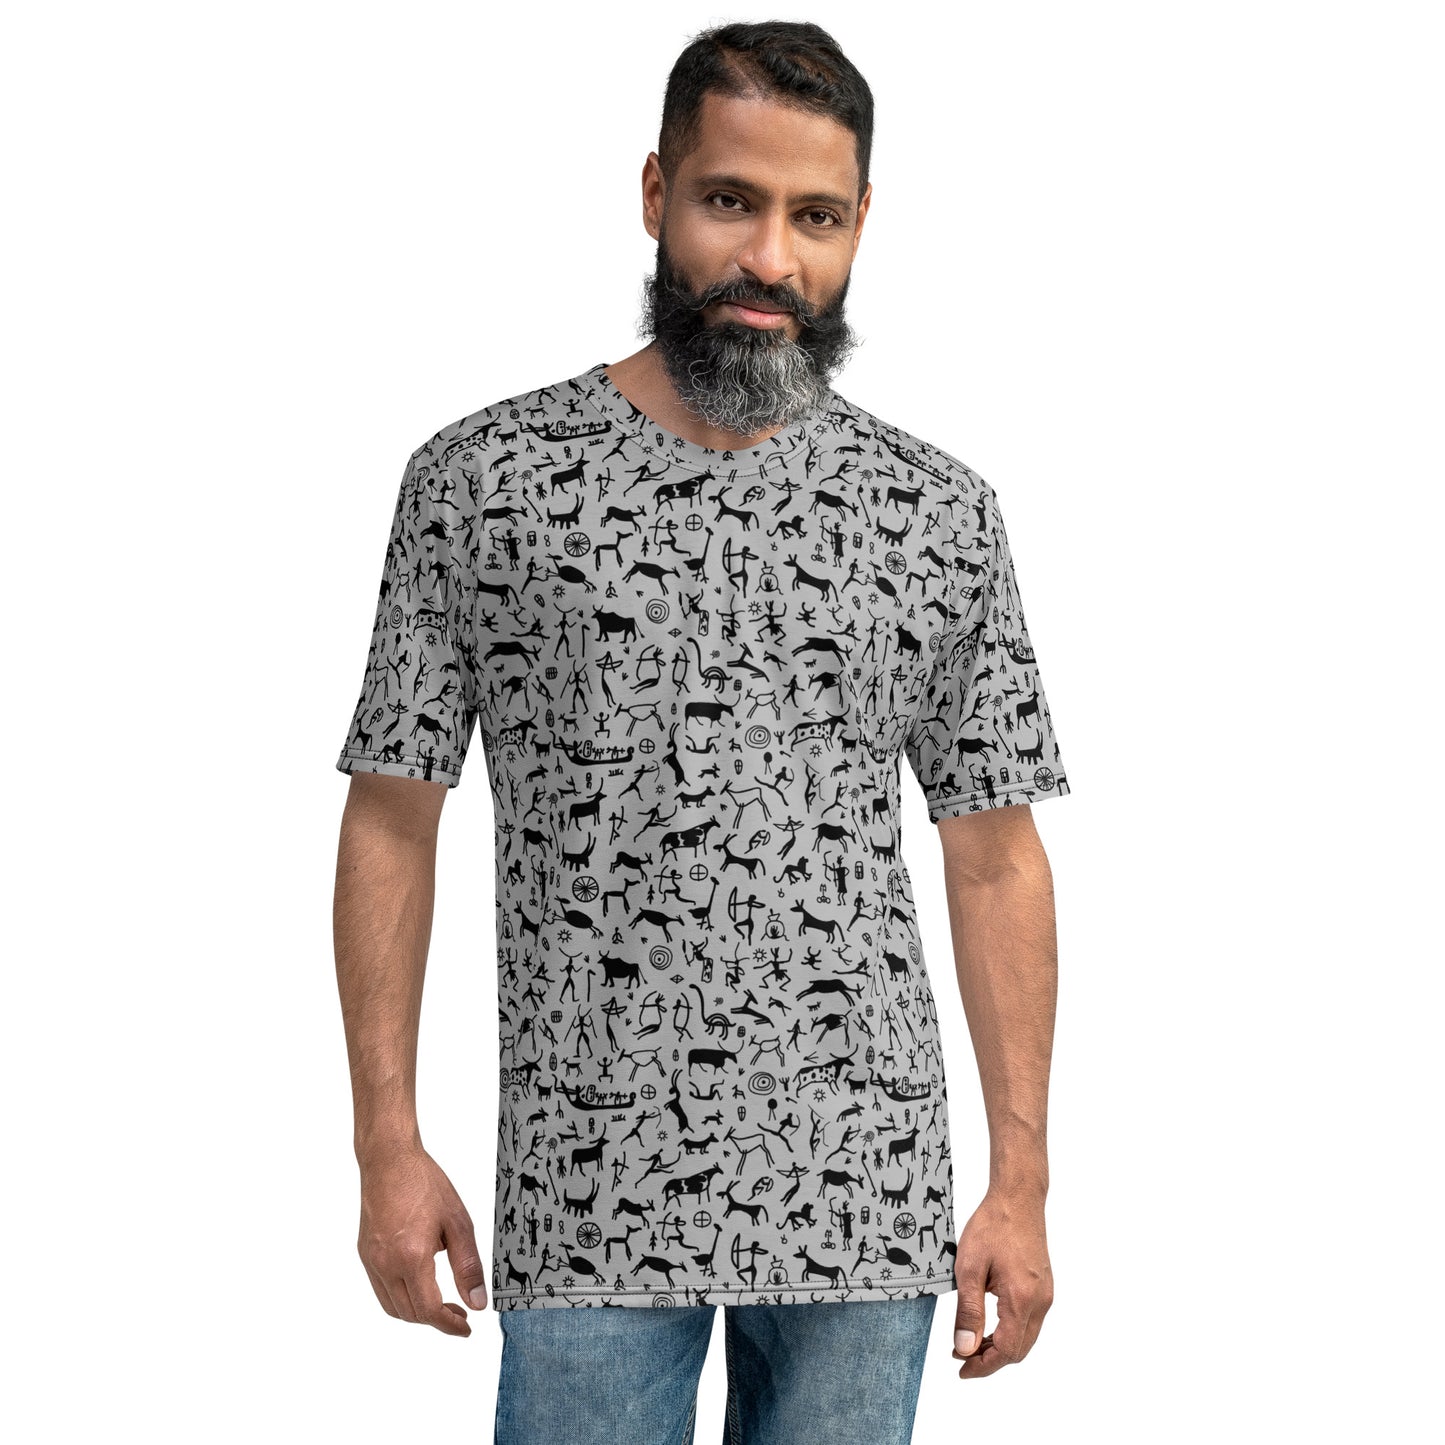 Men's t-shirt History kudrylab